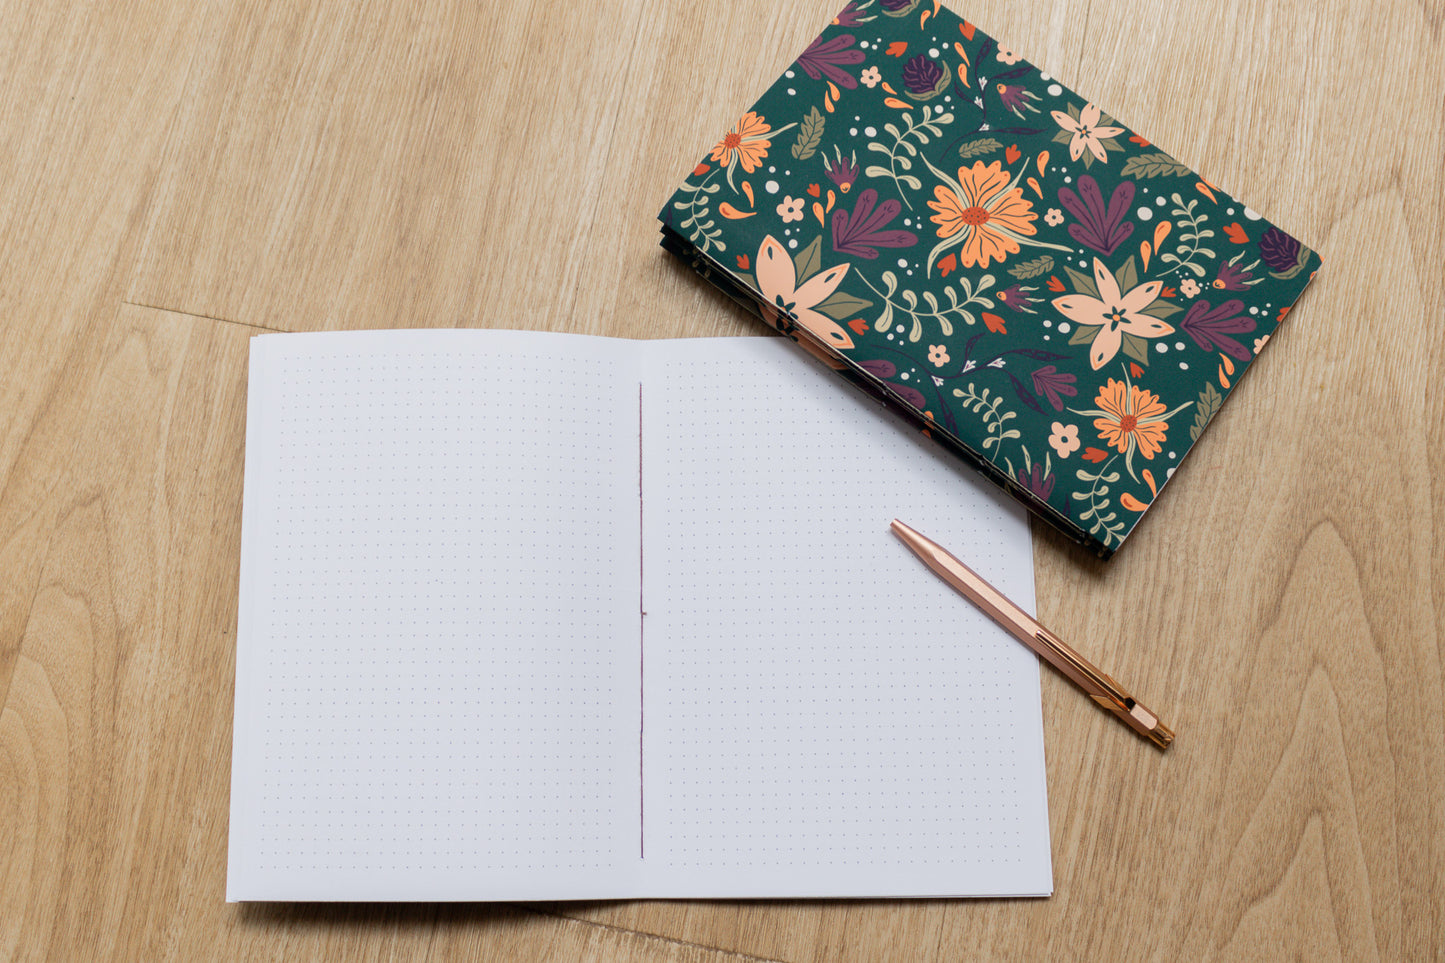 Handmade A5 notebook with autumnal floral design by MellowApricotStudio & KreativWerkstatt24 - dotted inner